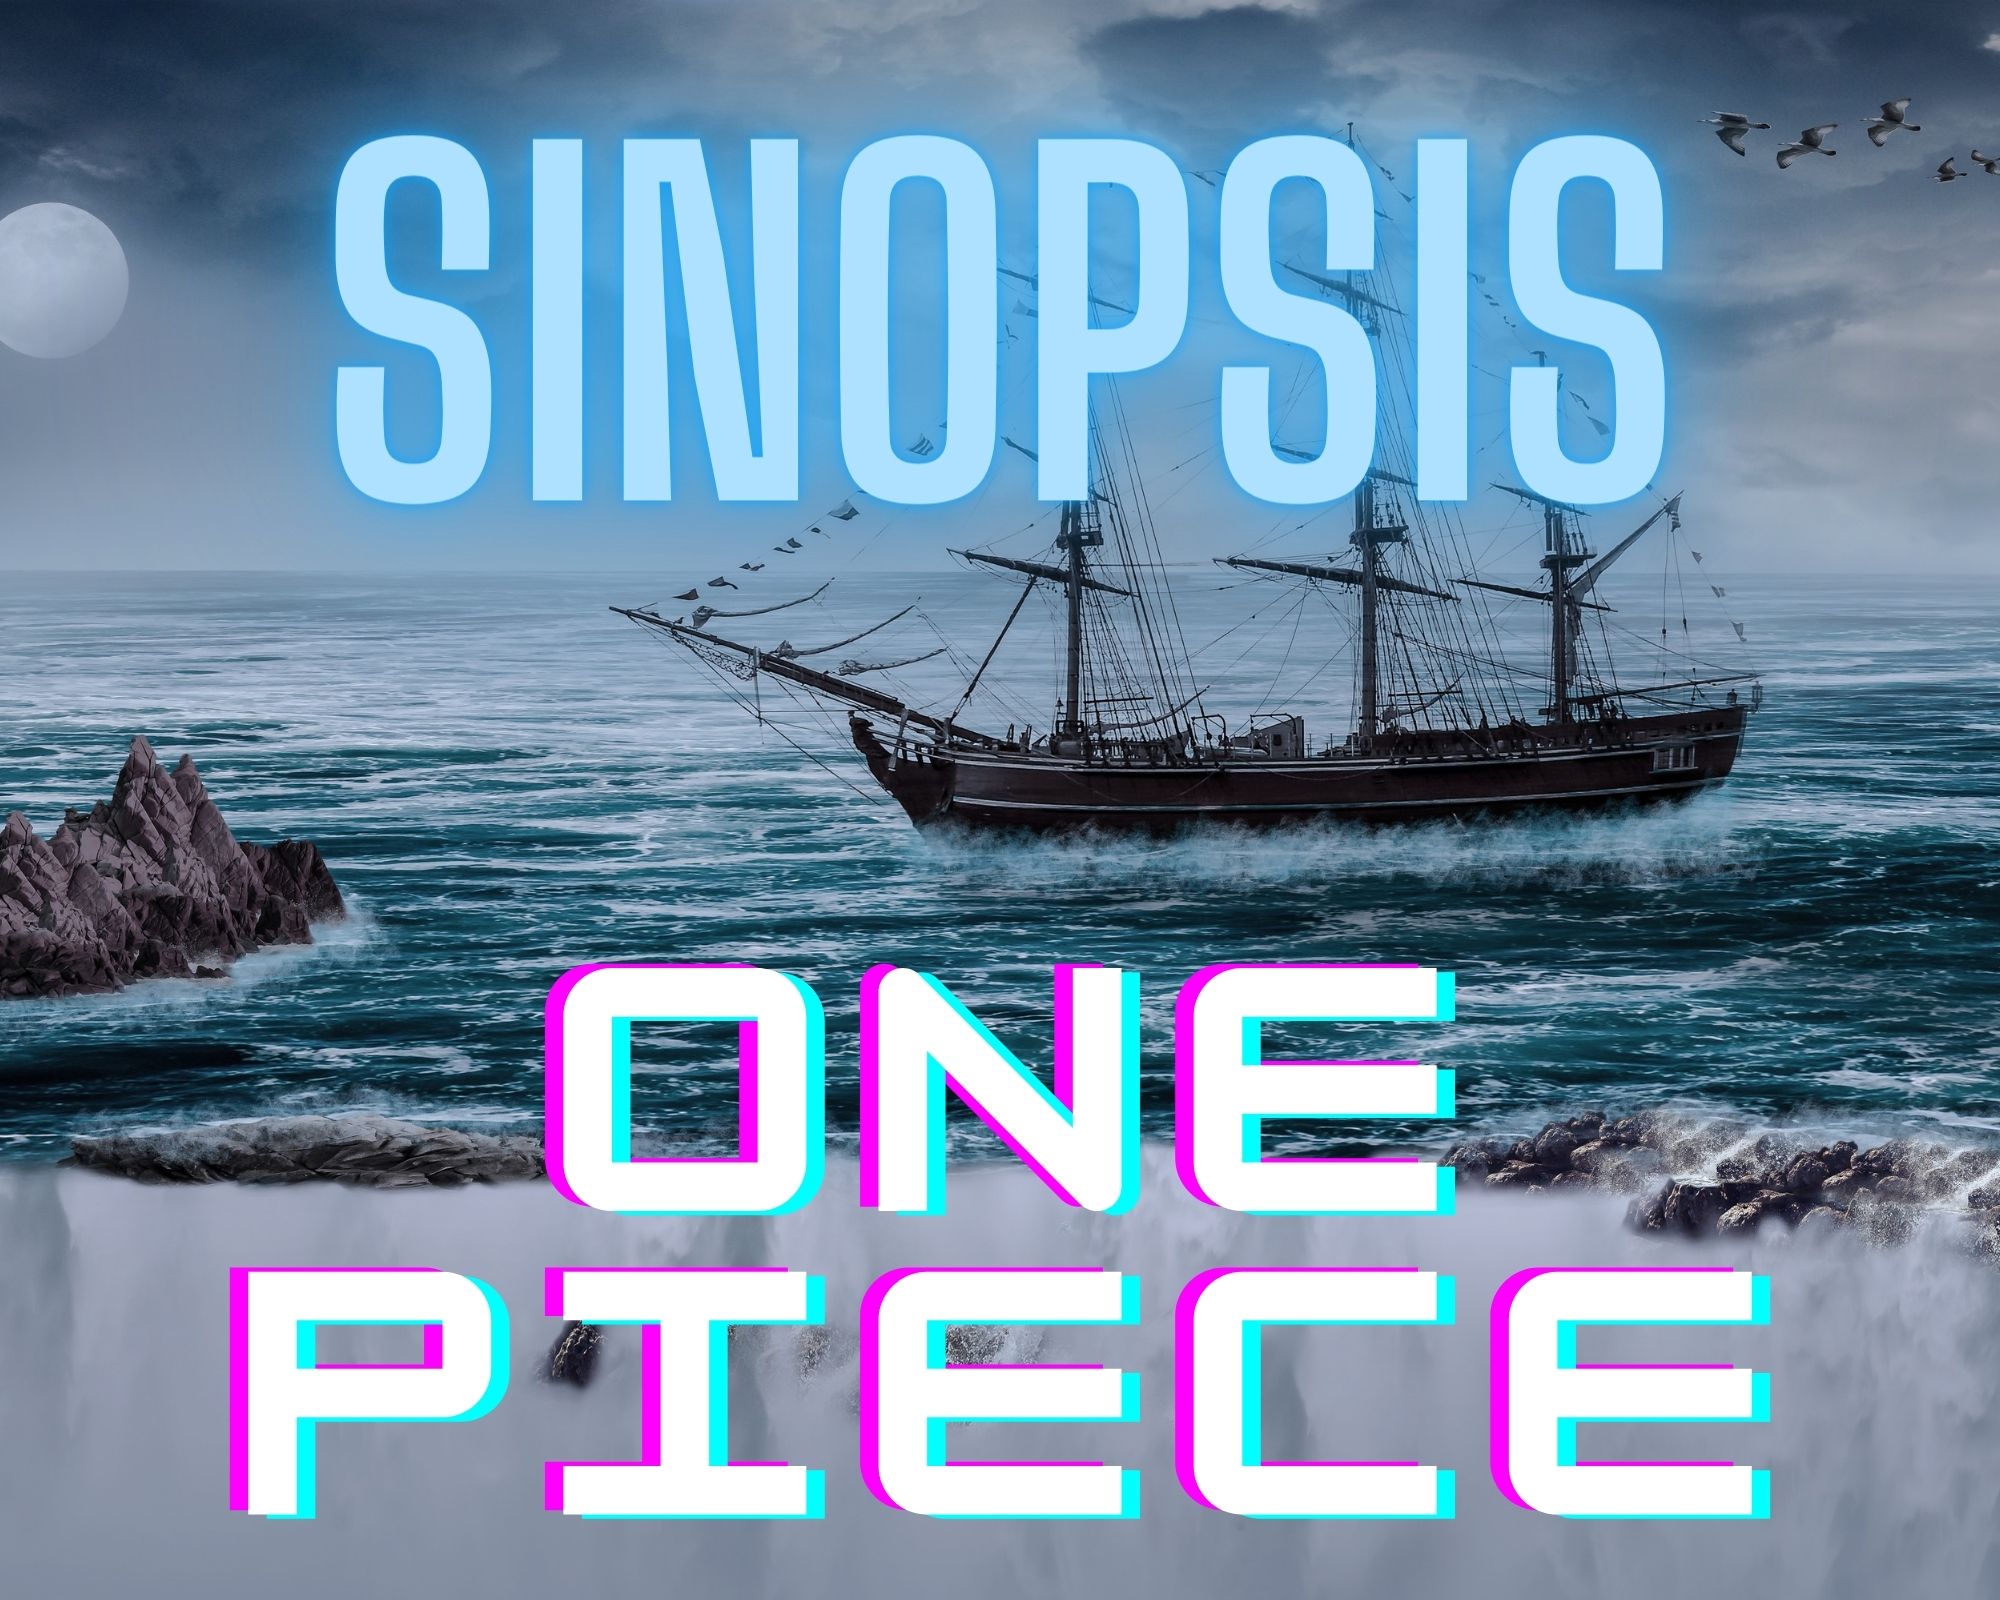 Sinopsis (Serial) One Piece Live Action Netflix yang akan Segera Rilis Awal Tahun 2022